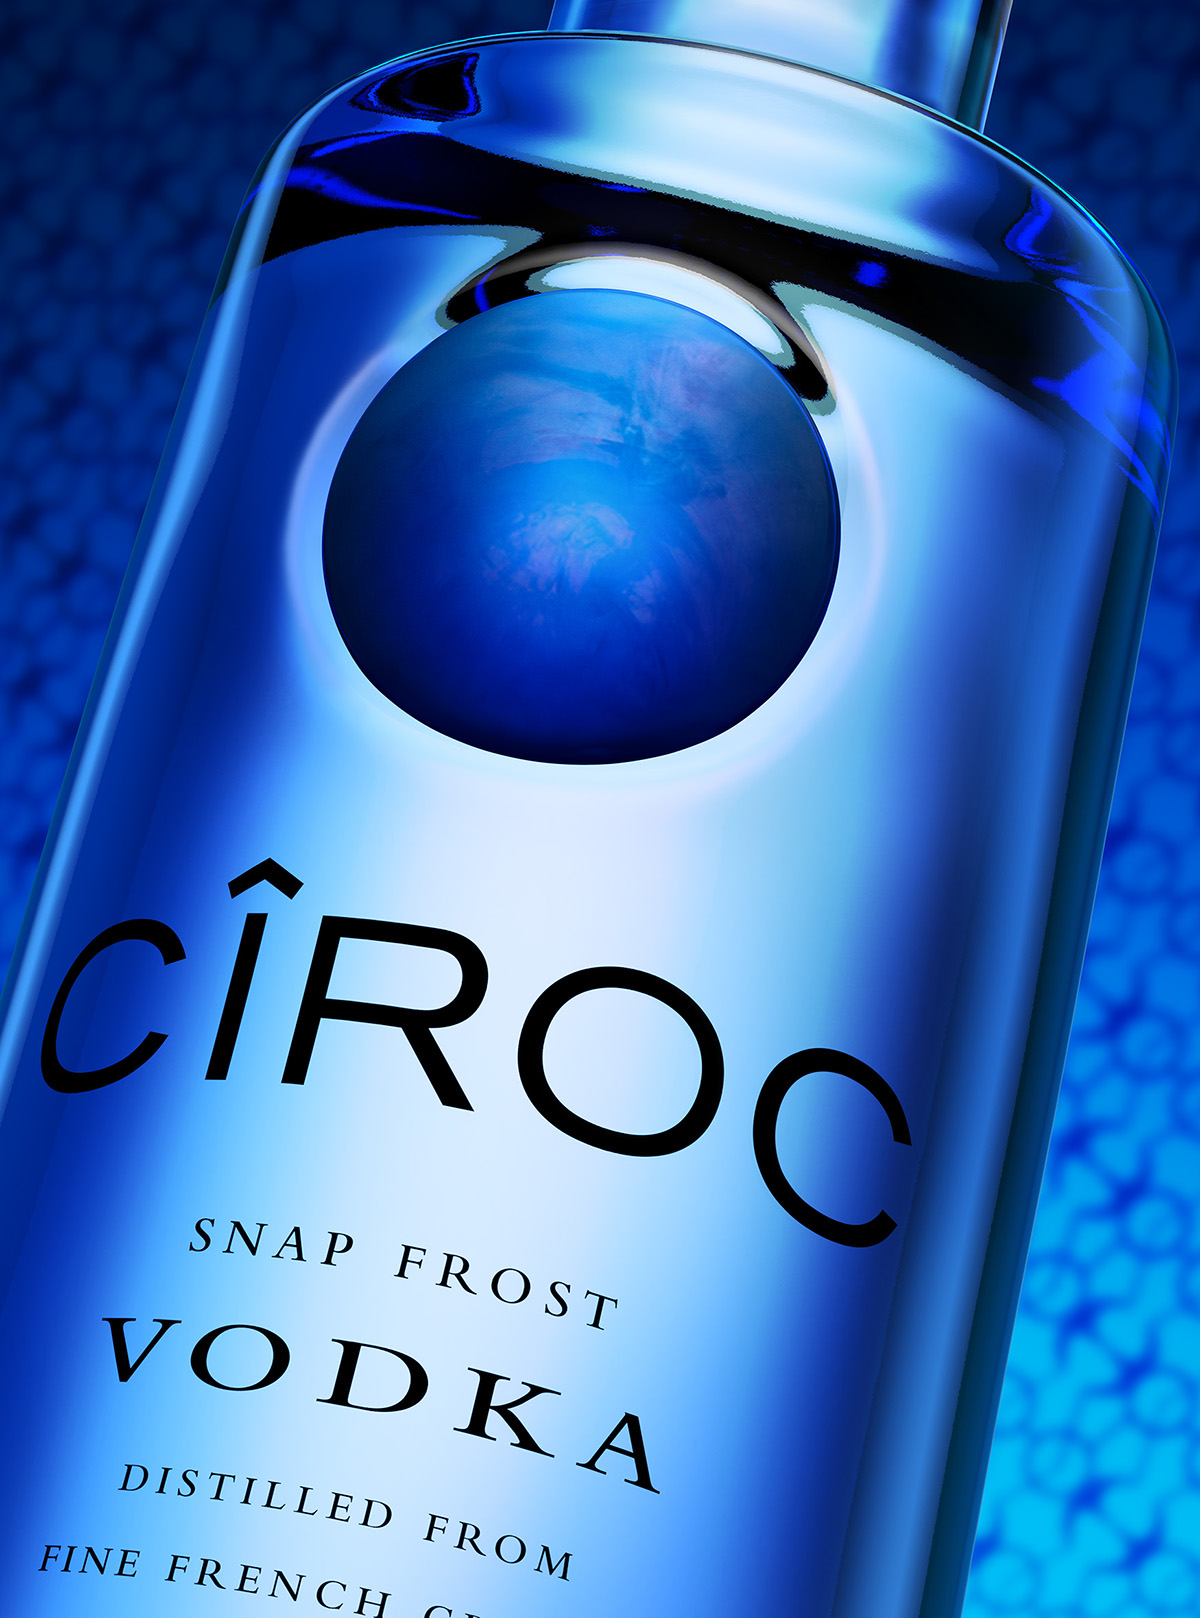 Ciroc Vodka Bottle Art Print 